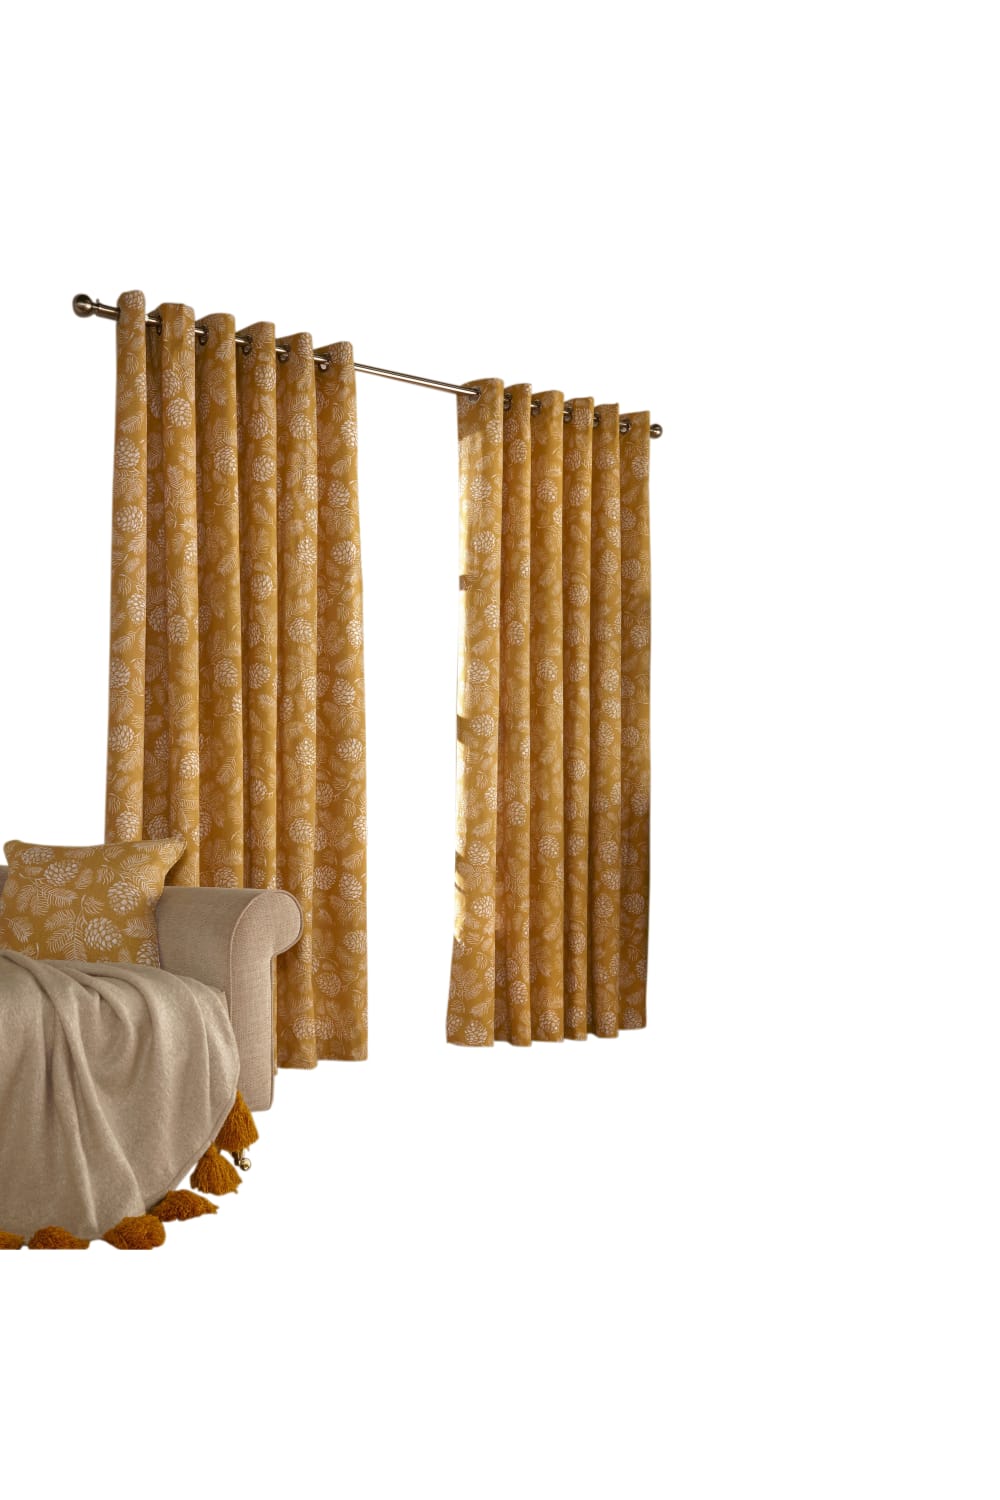 Furn Irwin Woodland Design Ringtop Eyelet Curtains (Pair) (Mustard) (66x72in)